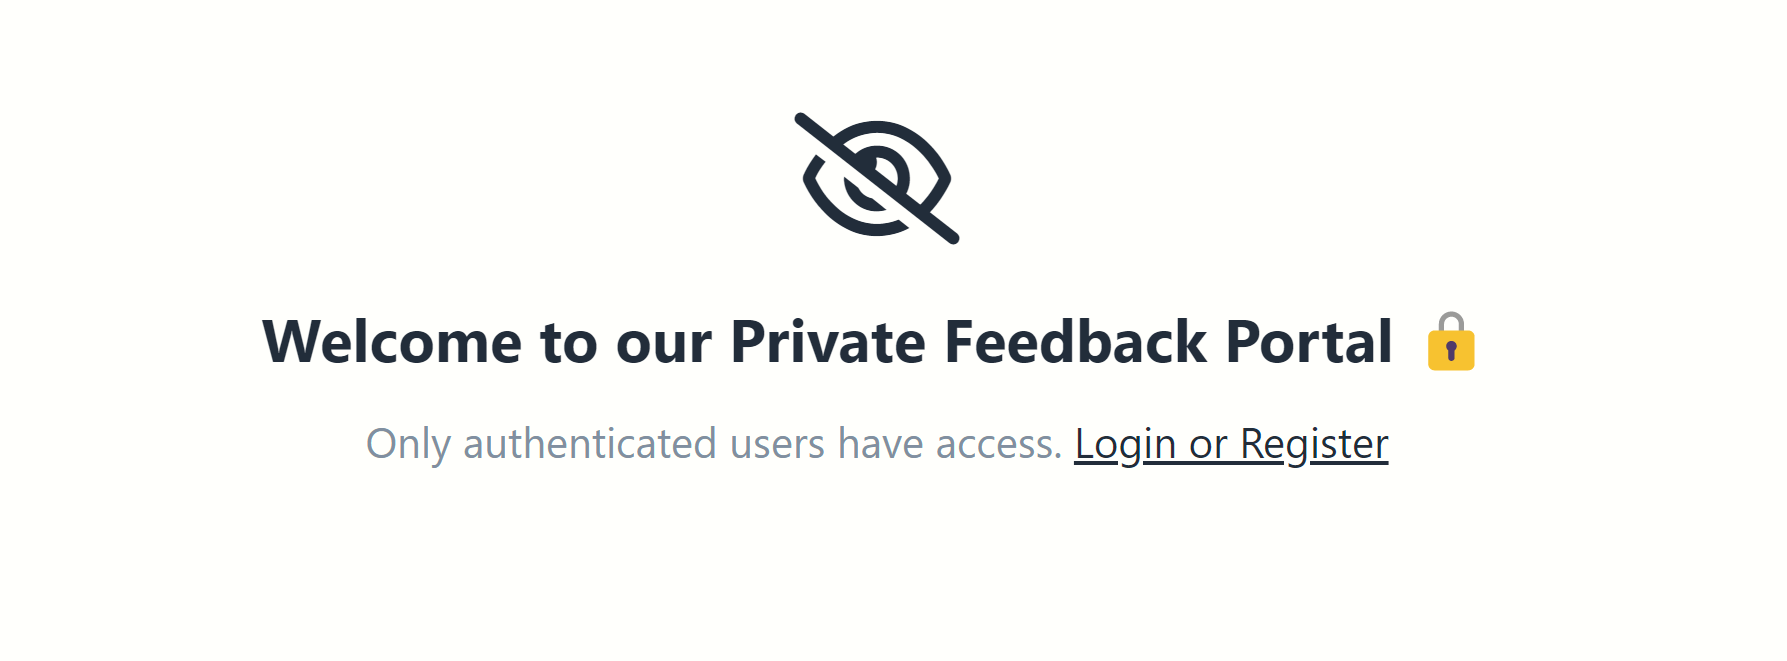 Feedback Portal Privacy